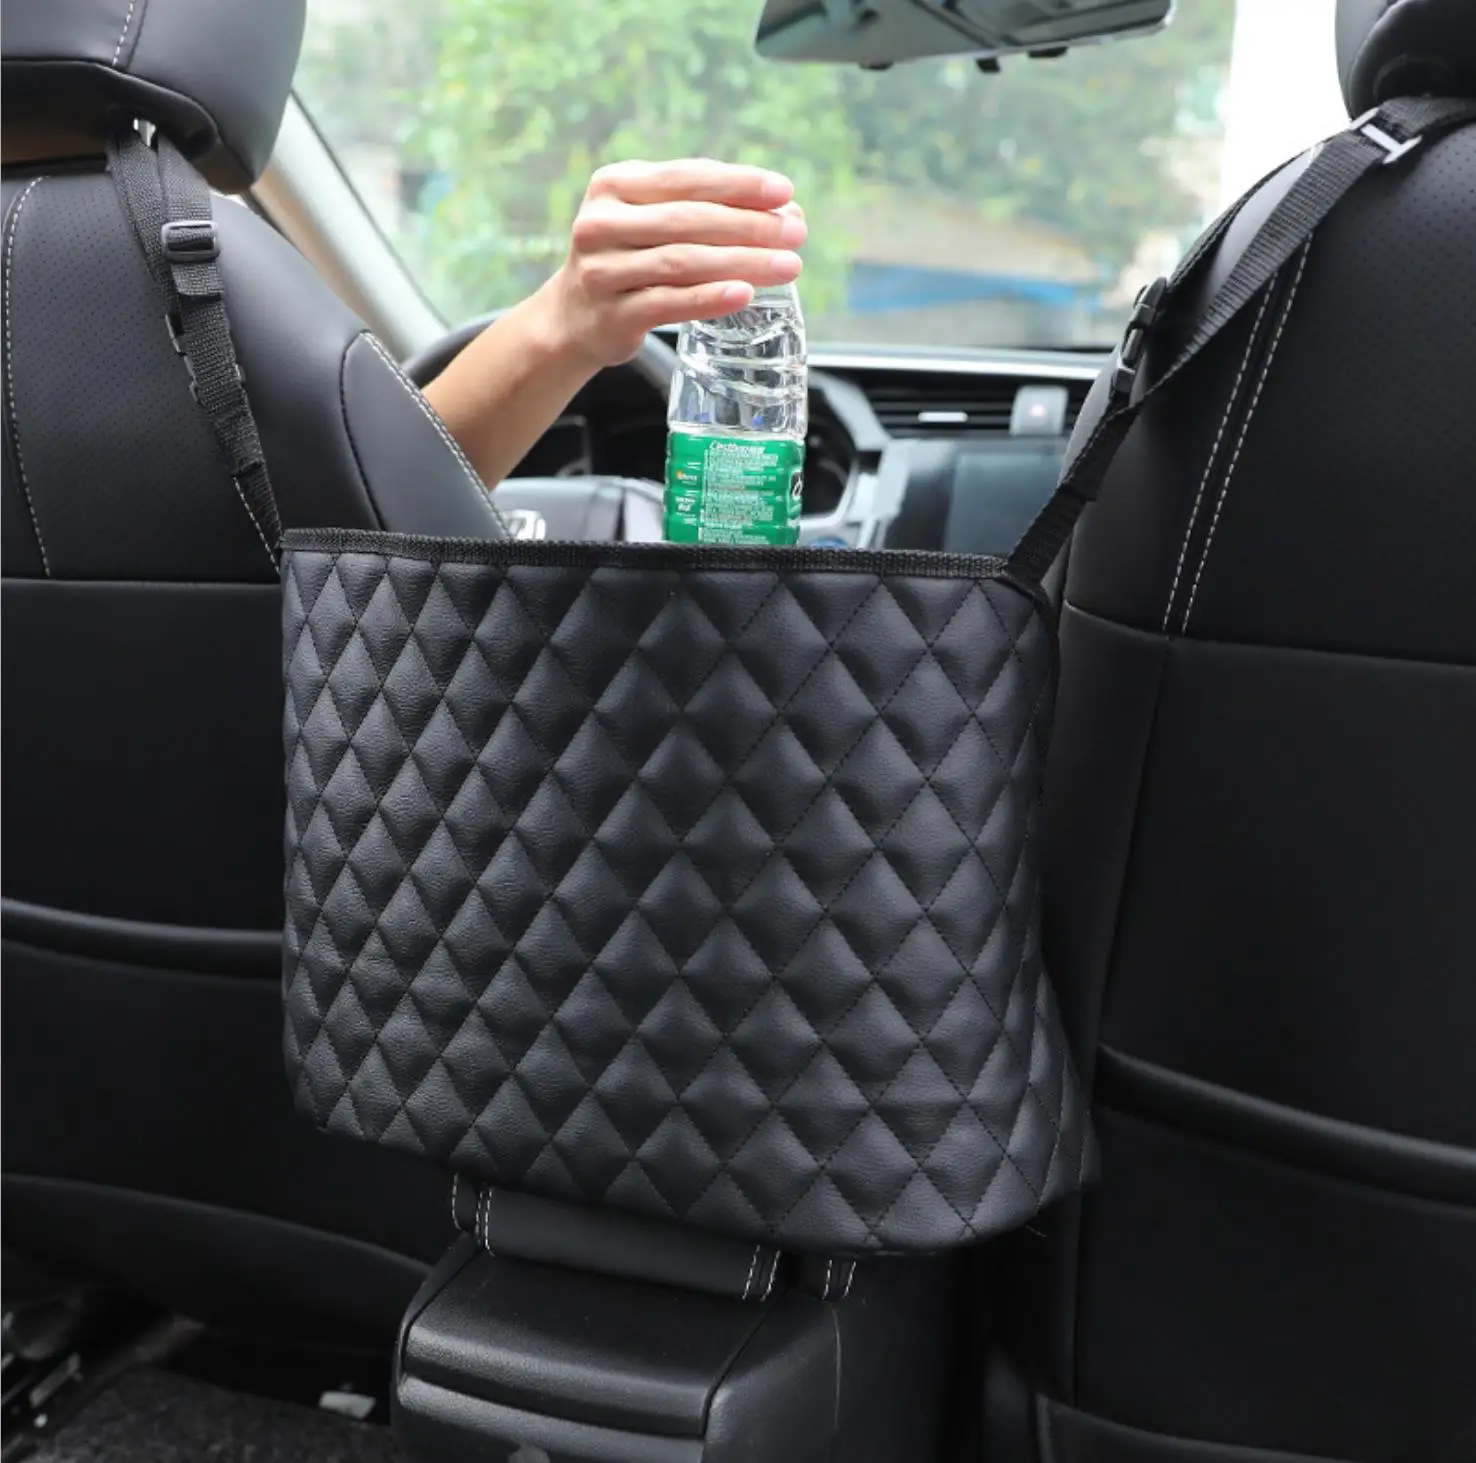 car seat storage and handbag holding